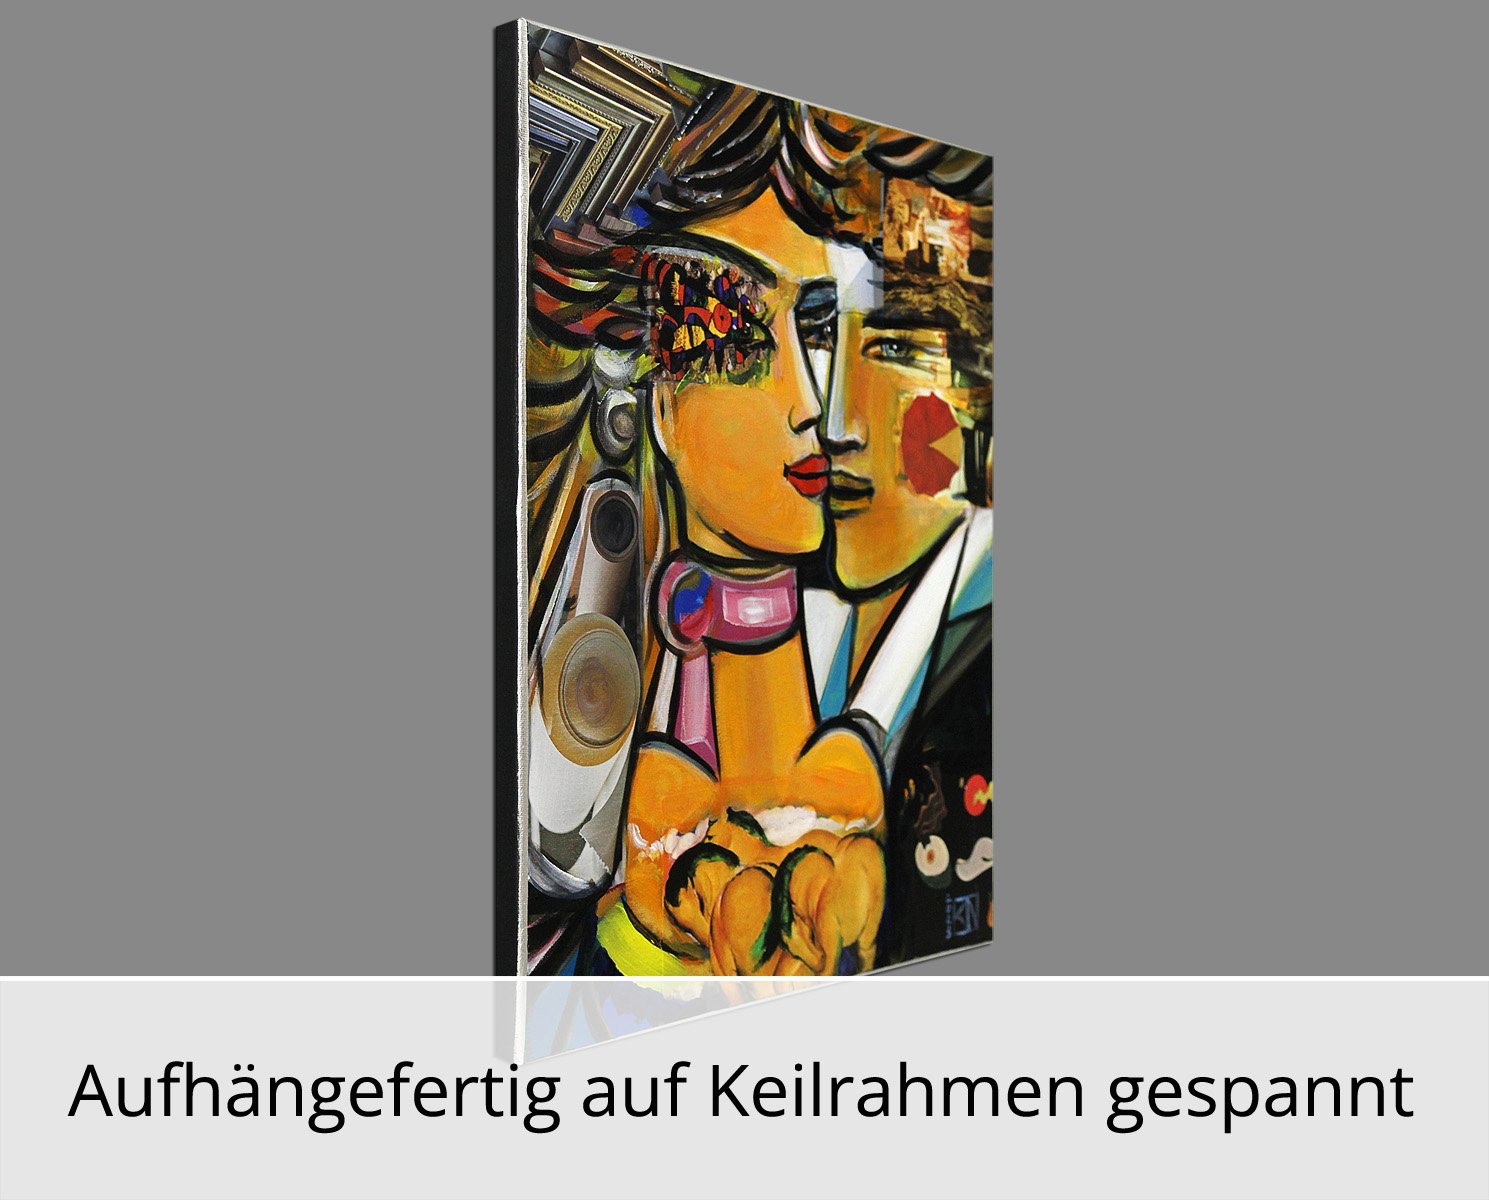 Moderne Kunst: Bis zum Horizont I, K. Namazi, Original/Unikat